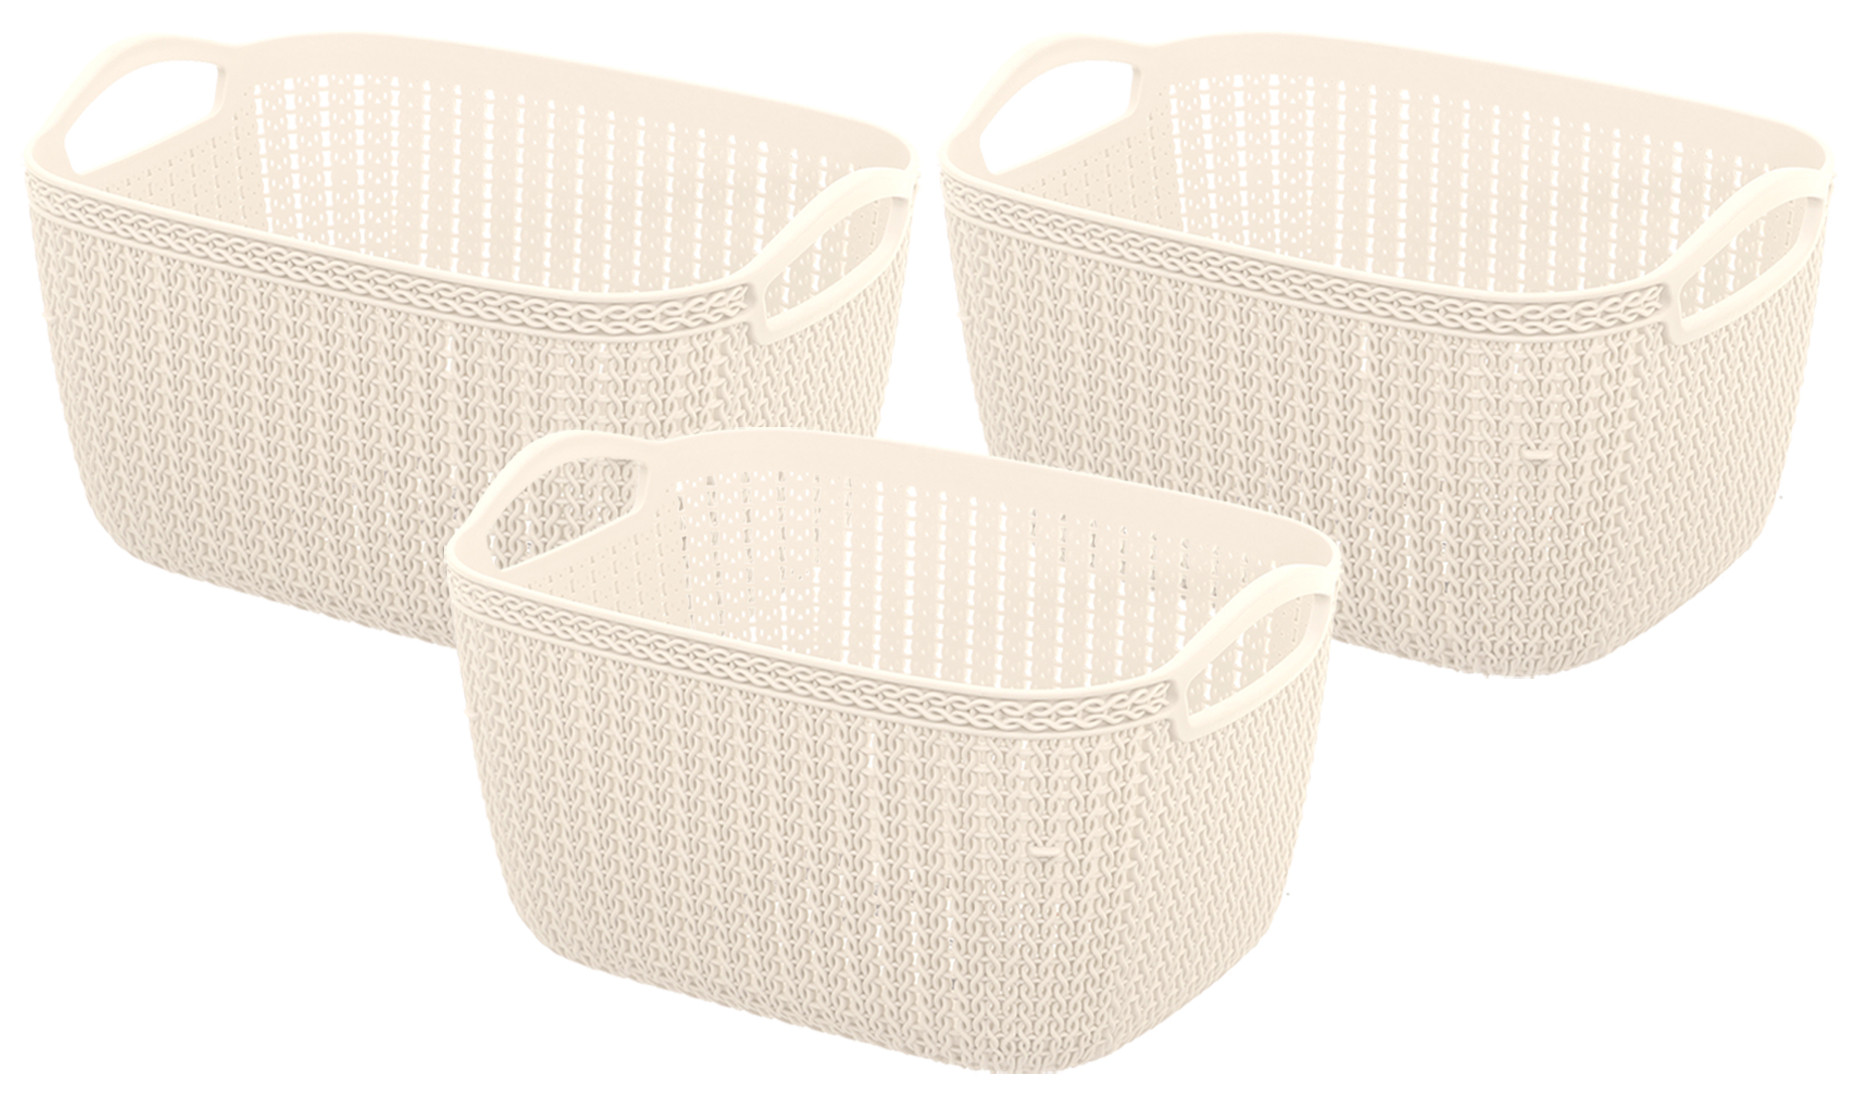 Kuber Industries Unbreakable Plastic Multipurpose Medium Size Flexible Storage Baskets / Fruit Vegetable Bathroom Stationary Home Basket with Handles (Cream) -CTKTC39053